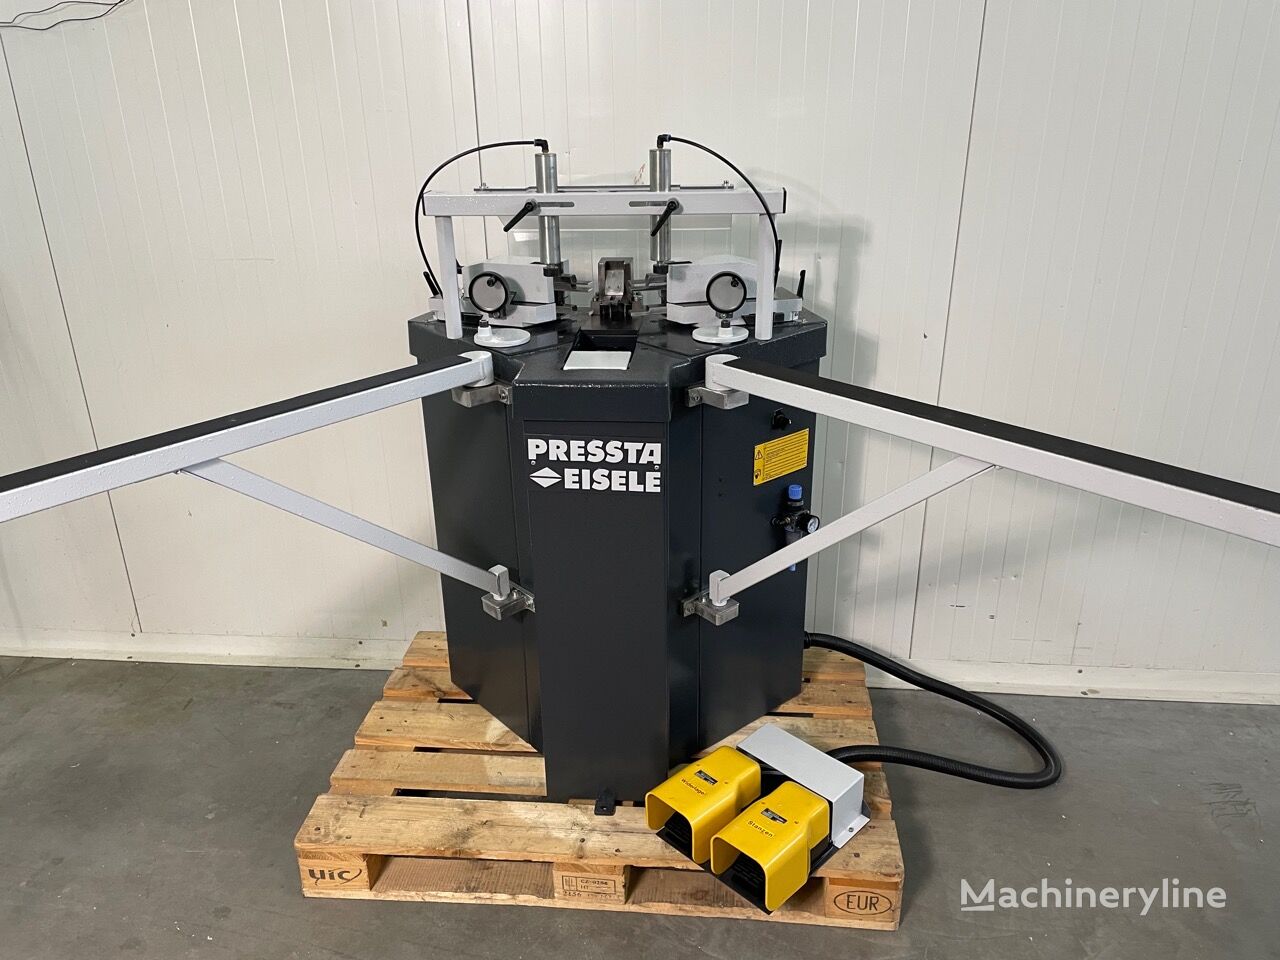 Pressta Eisele Presta 1800 metal press